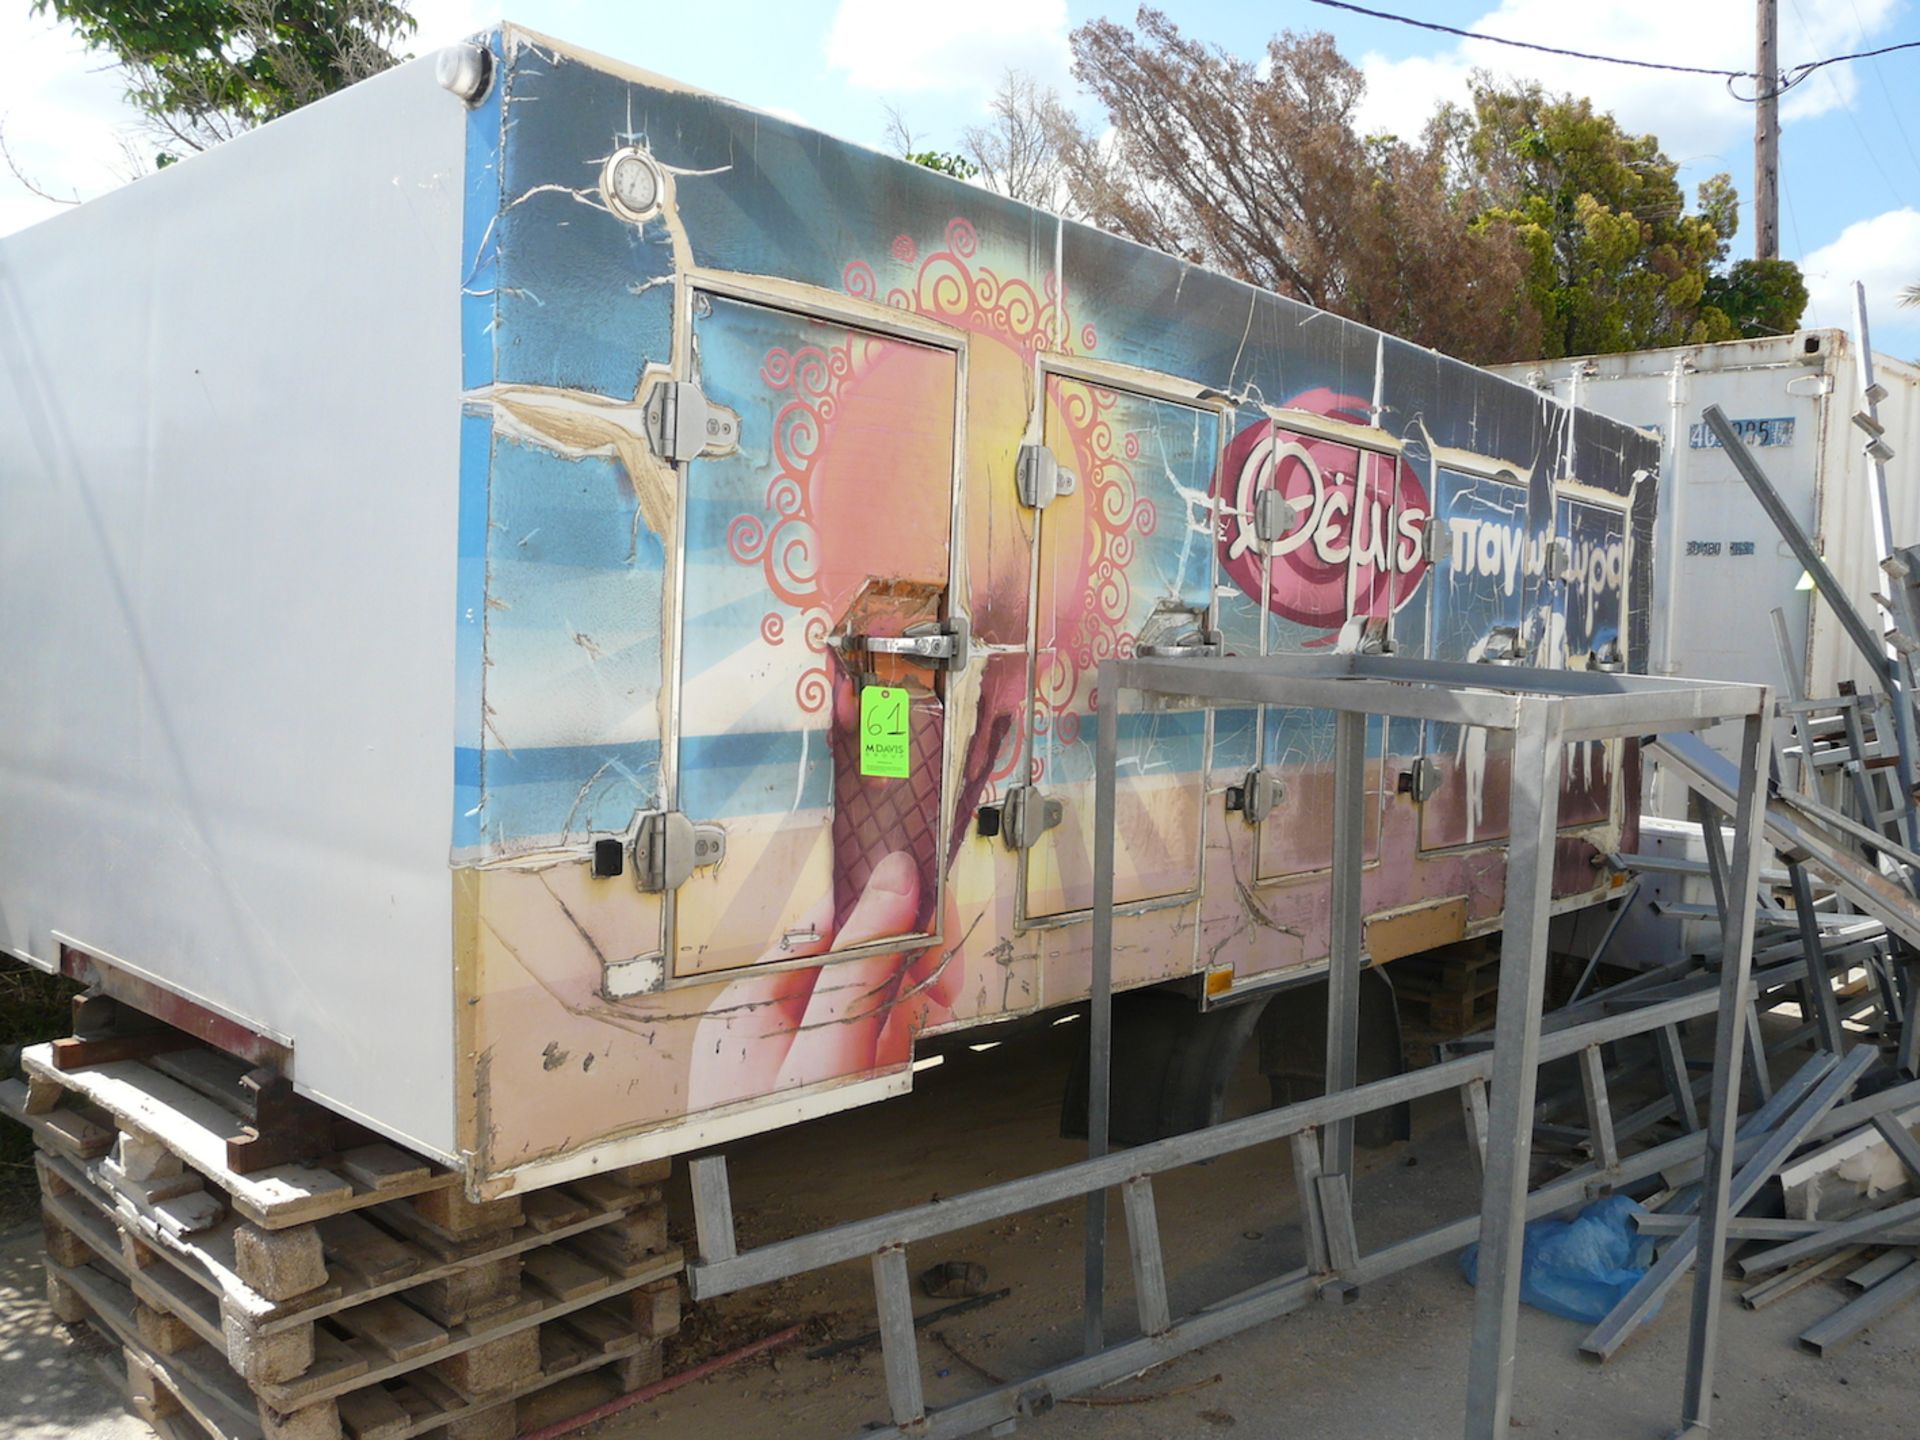 English: Fridge Unit for Truck Ice Cream Delivery With Motor 470x220 cm 4+4 Doors Greek: Θάλαμος